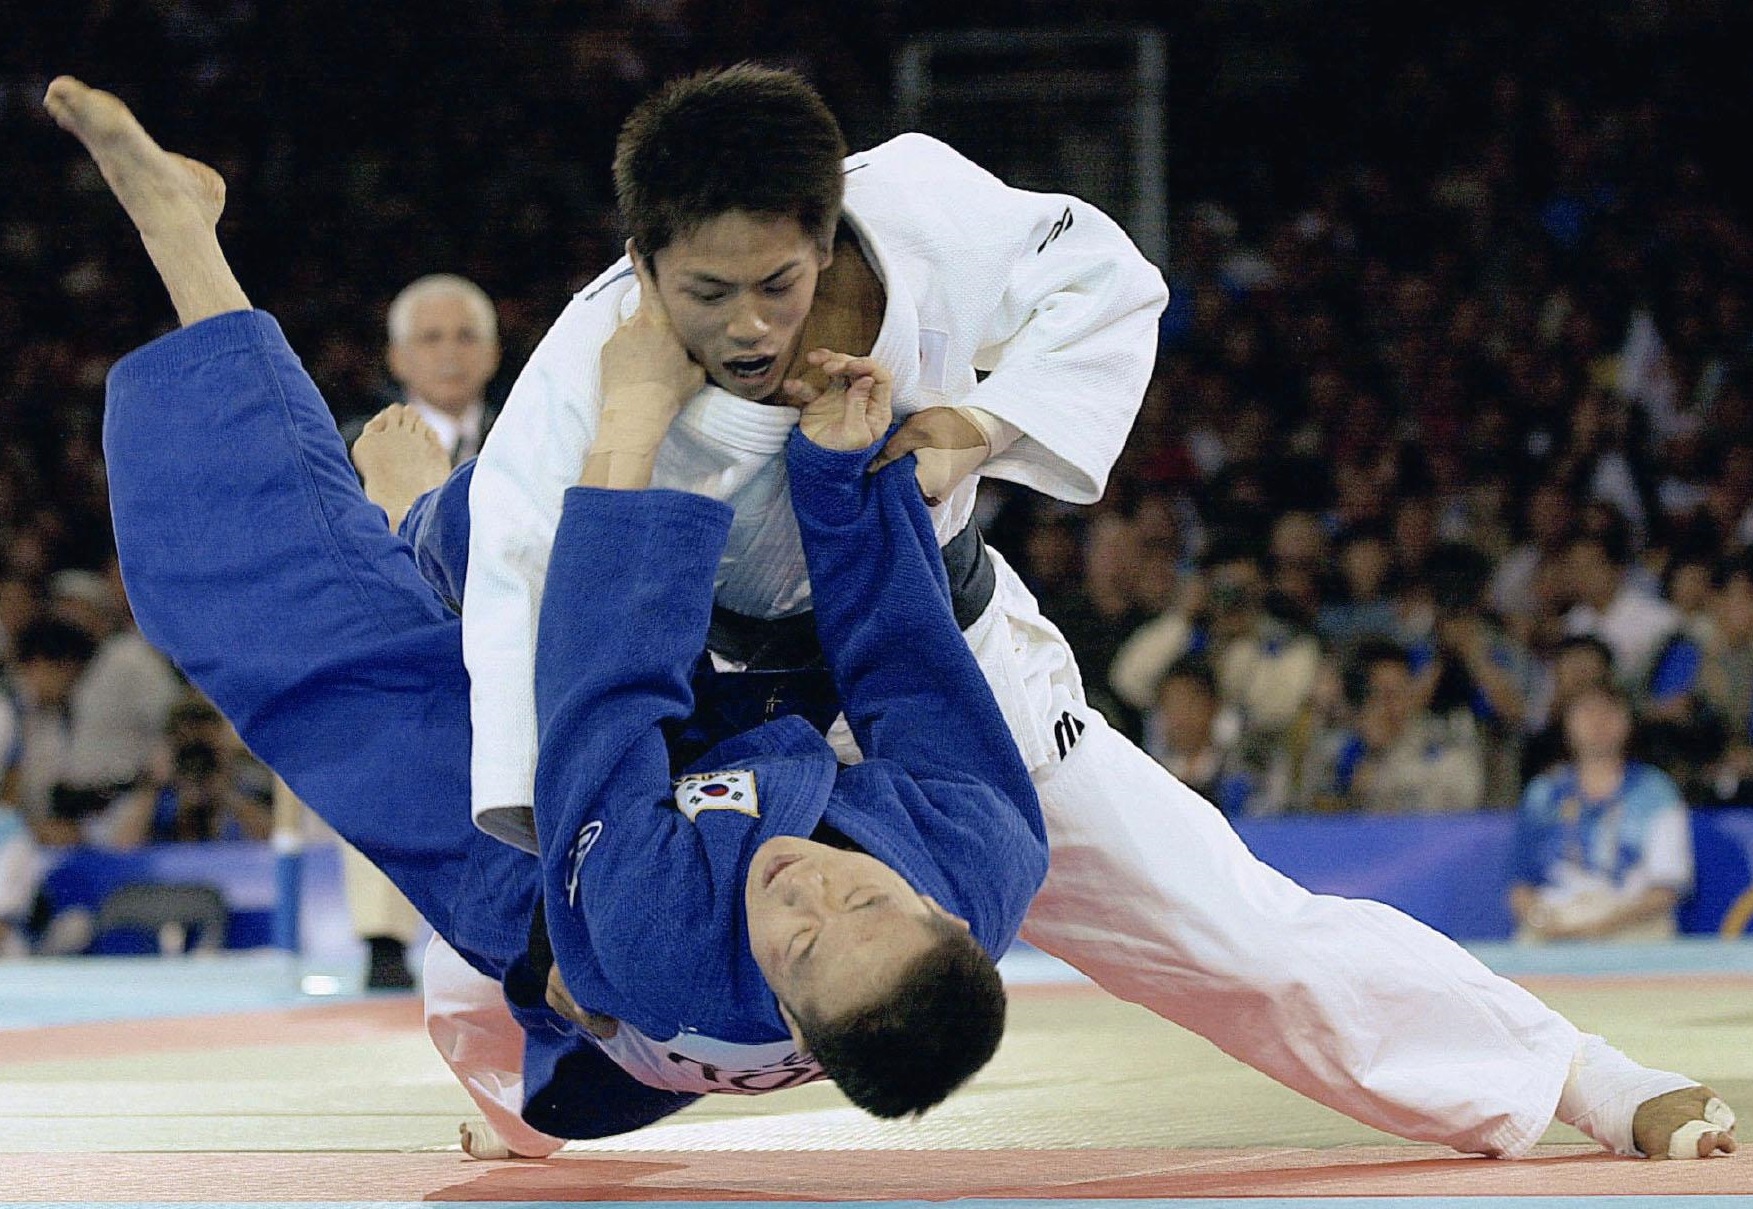 Best Of judo world Turkish athlete wins bronze at world judo championships